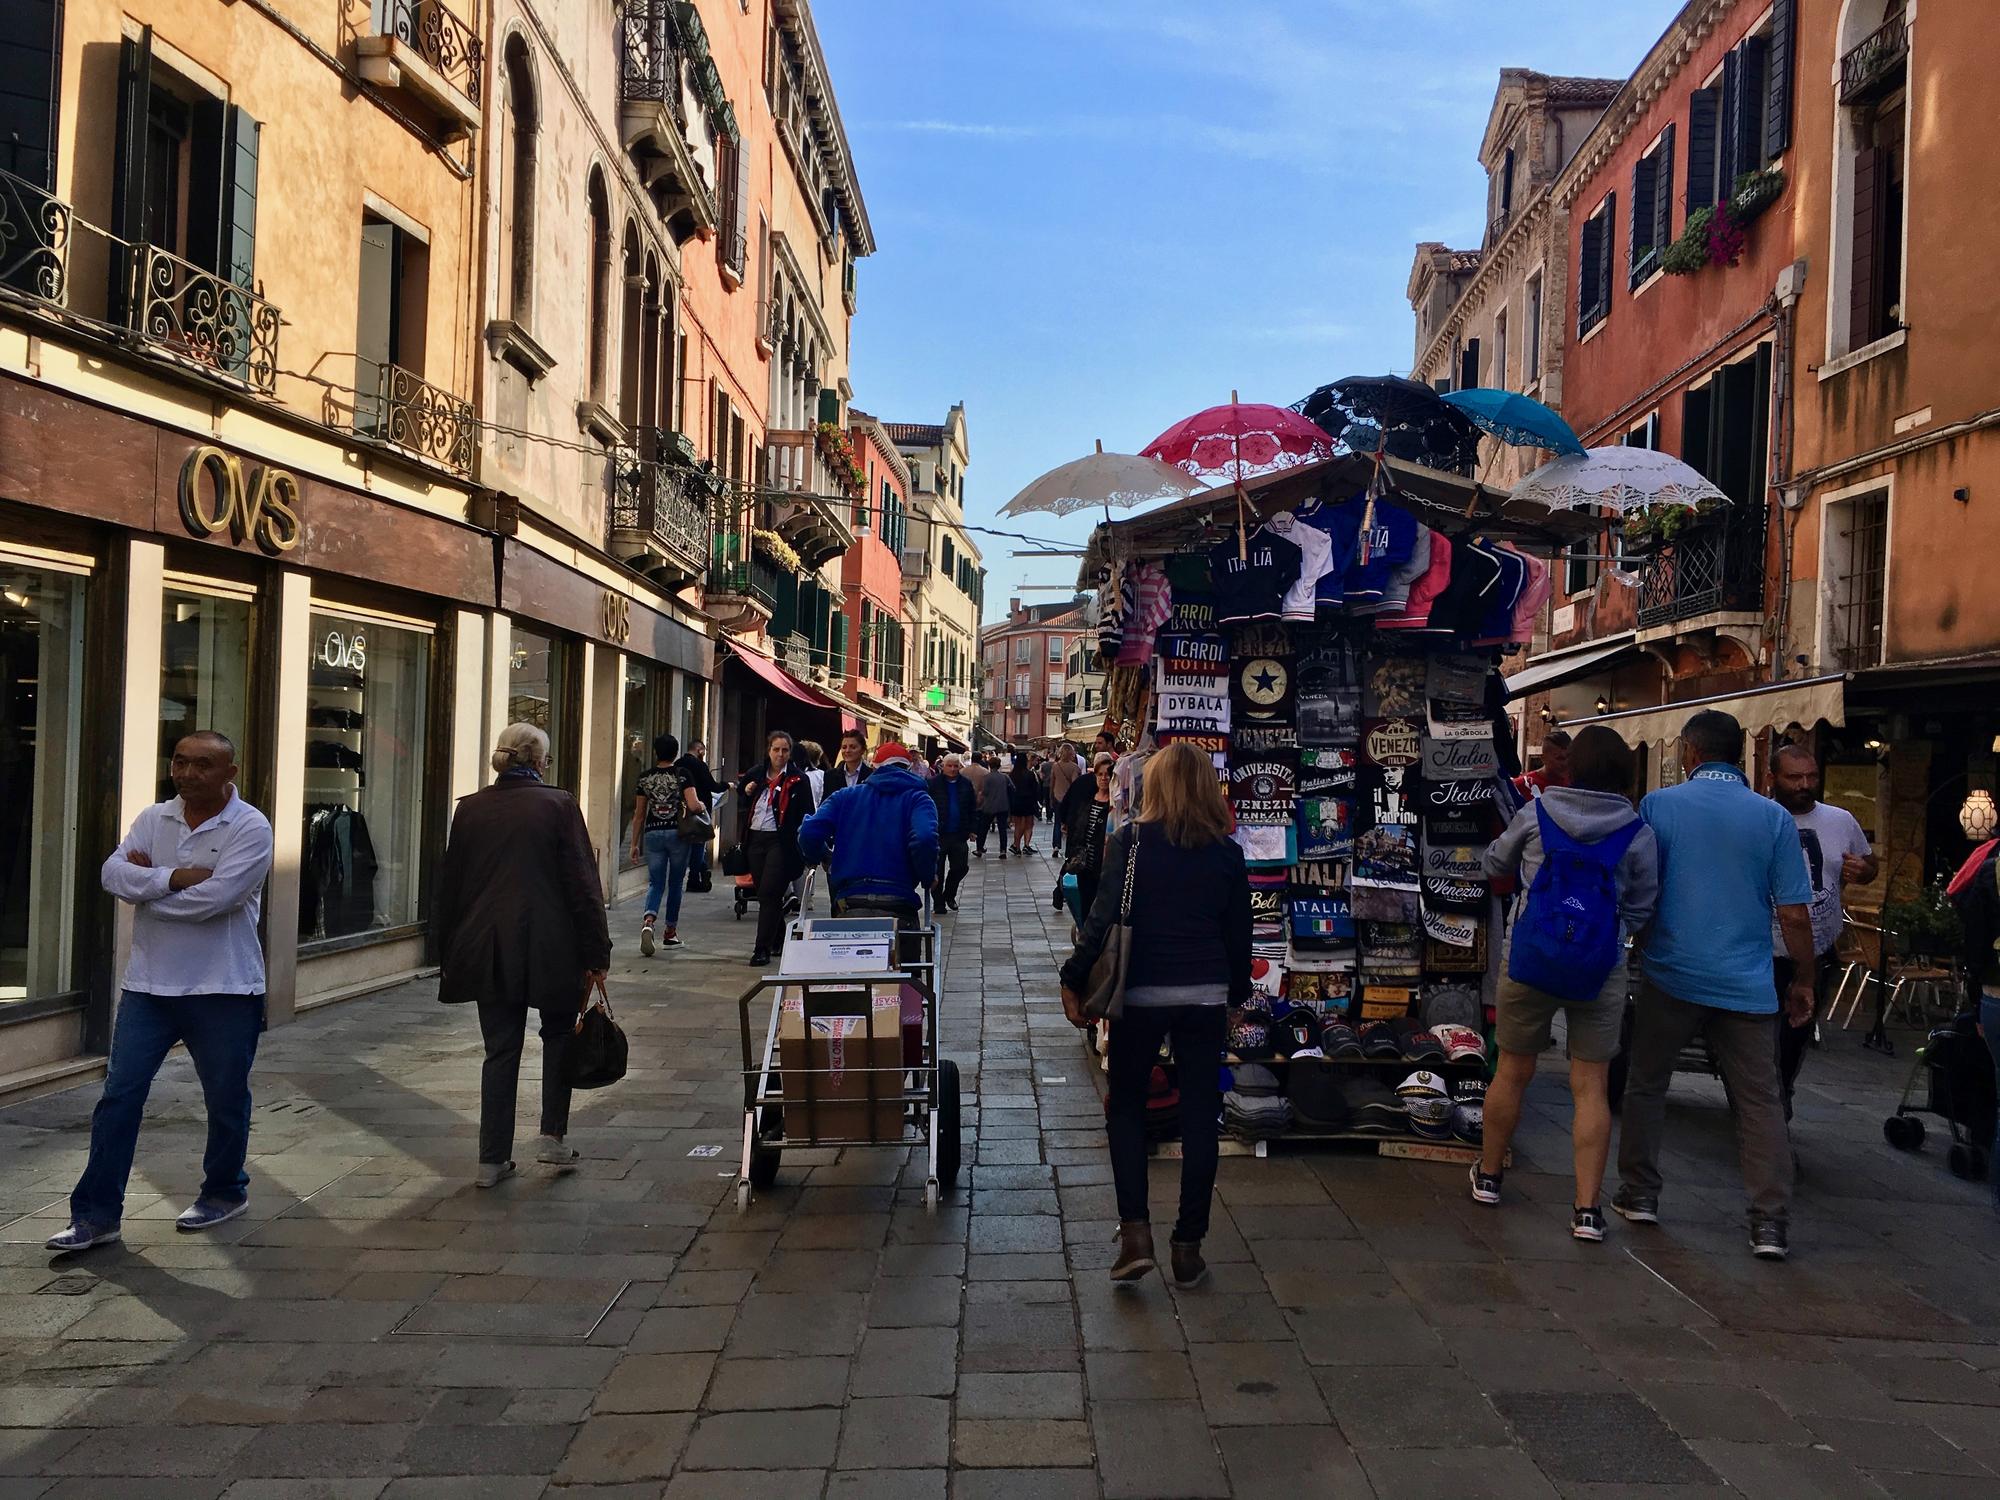 🇮🇹 Venice, Italy, September 2017.